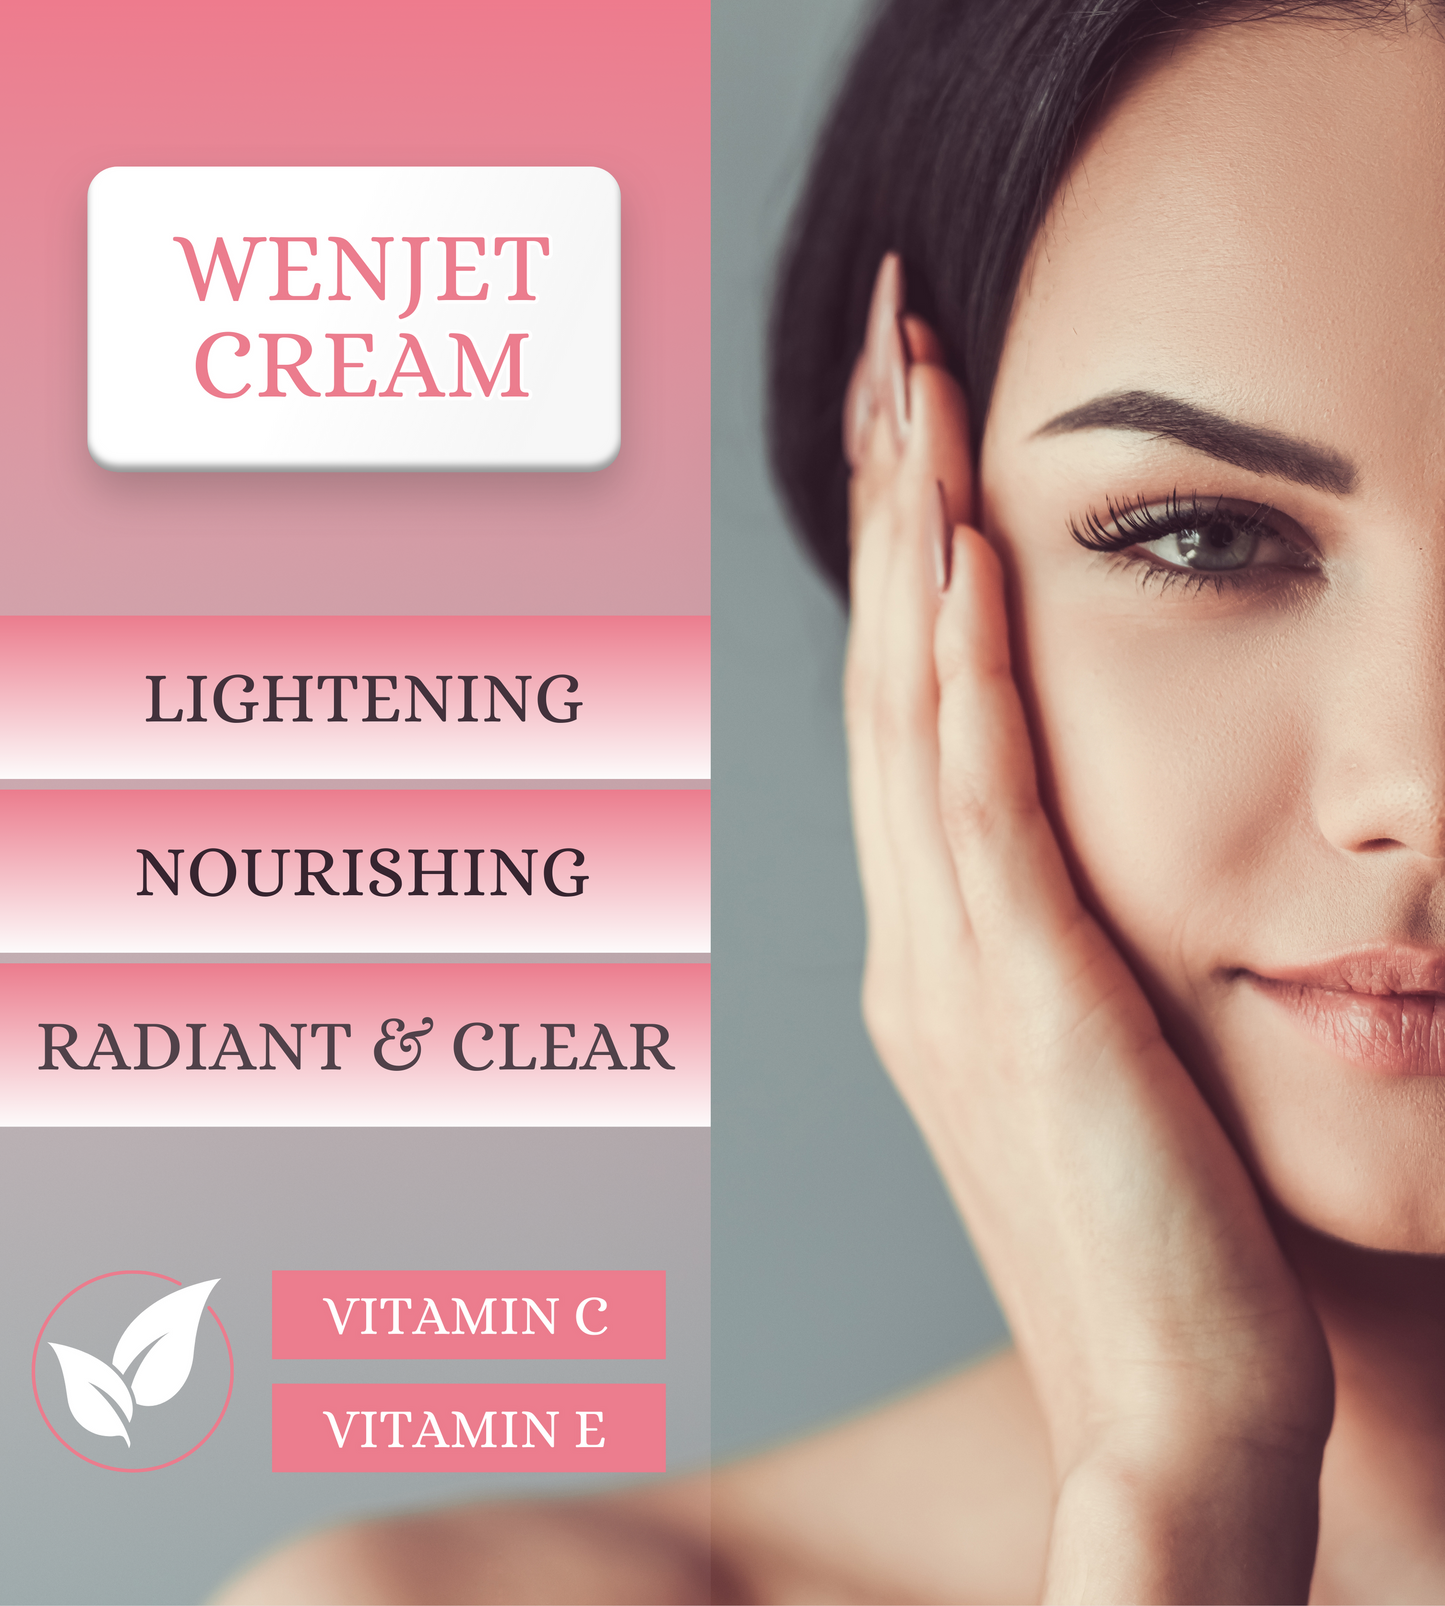 Wenjet Cream